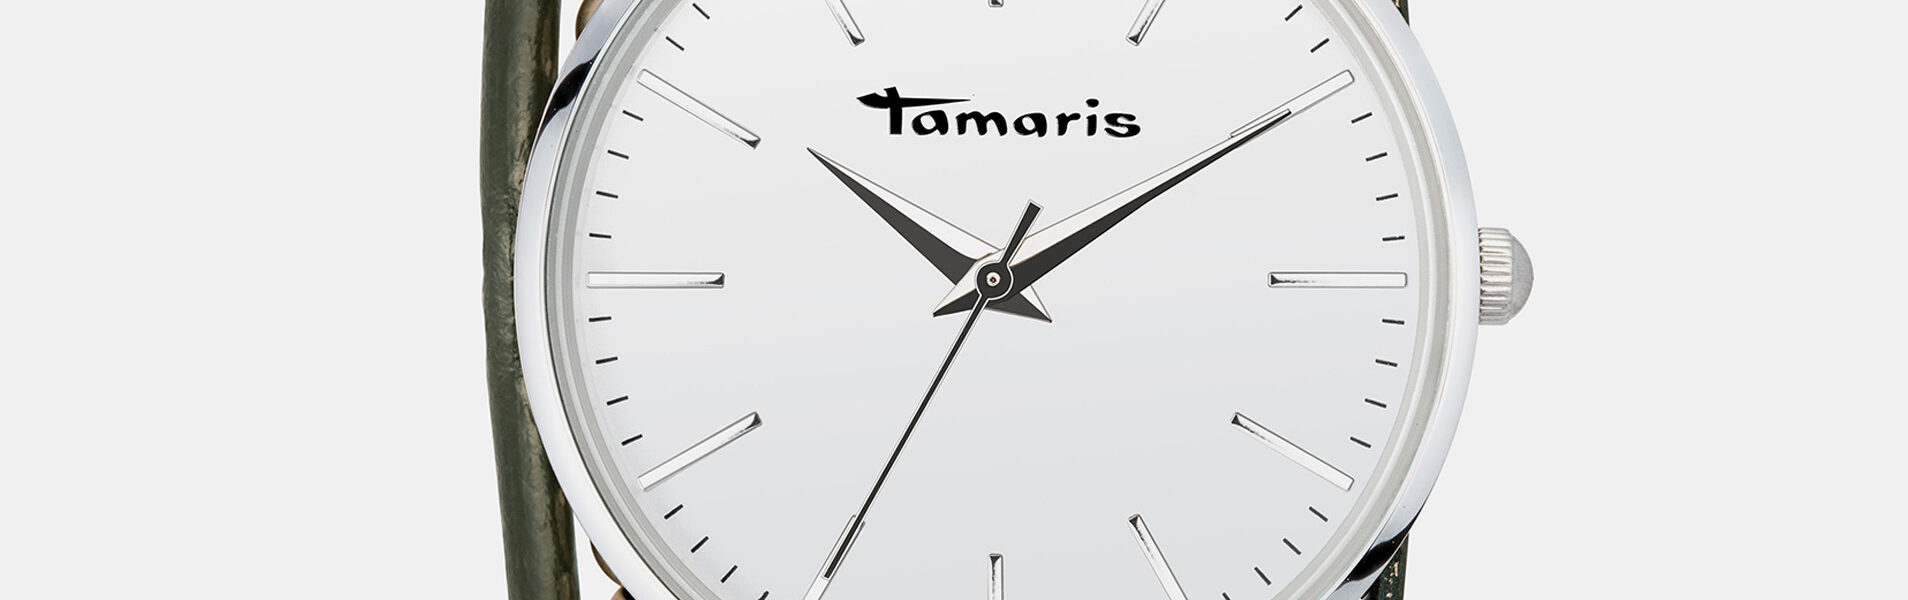 Dámske hodinky so zeleným remienkom Tamaris